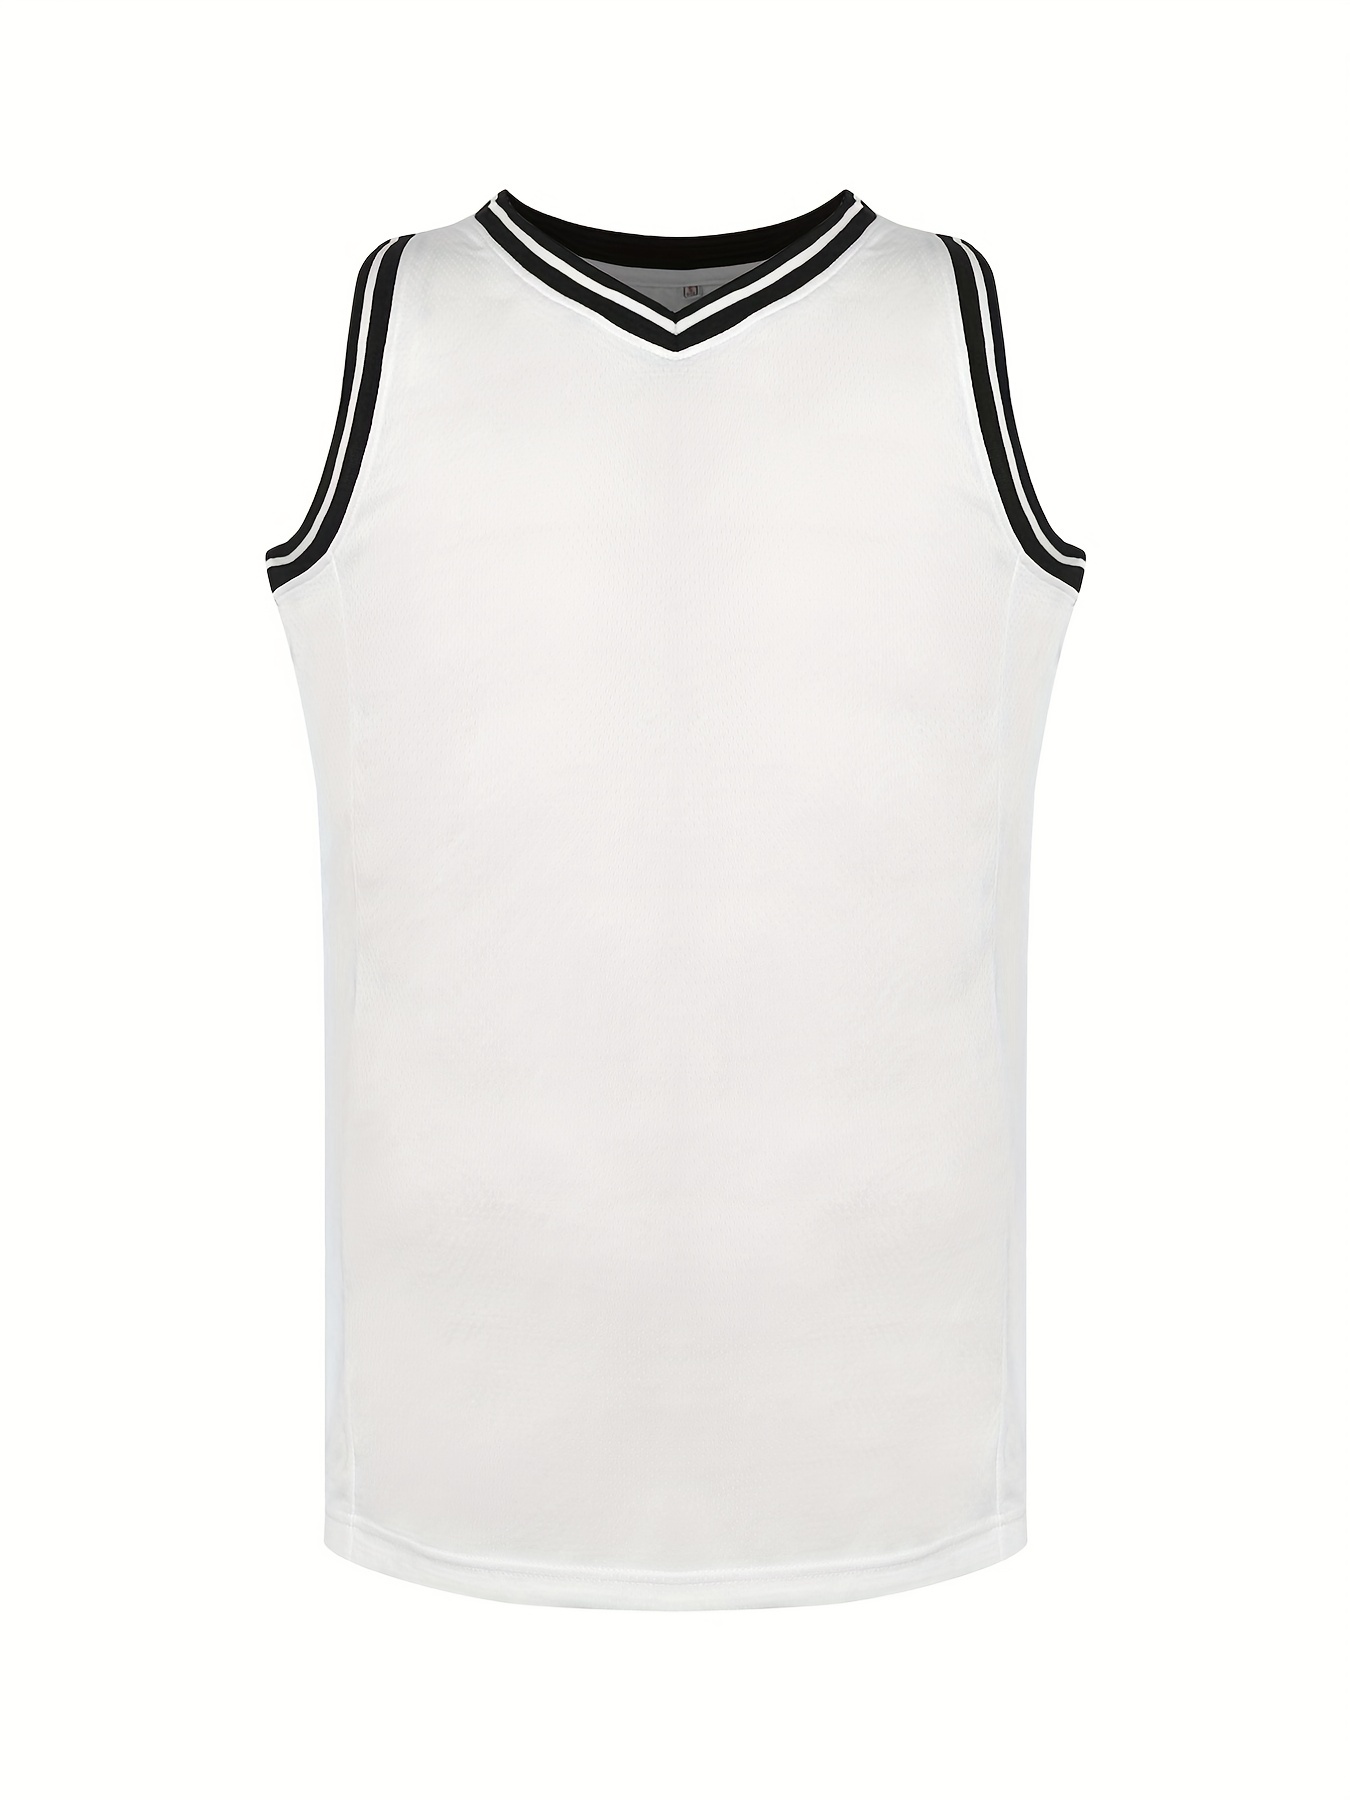 Vest Jerseys Training Vests 40*56cm Basketball Breathable Cricket